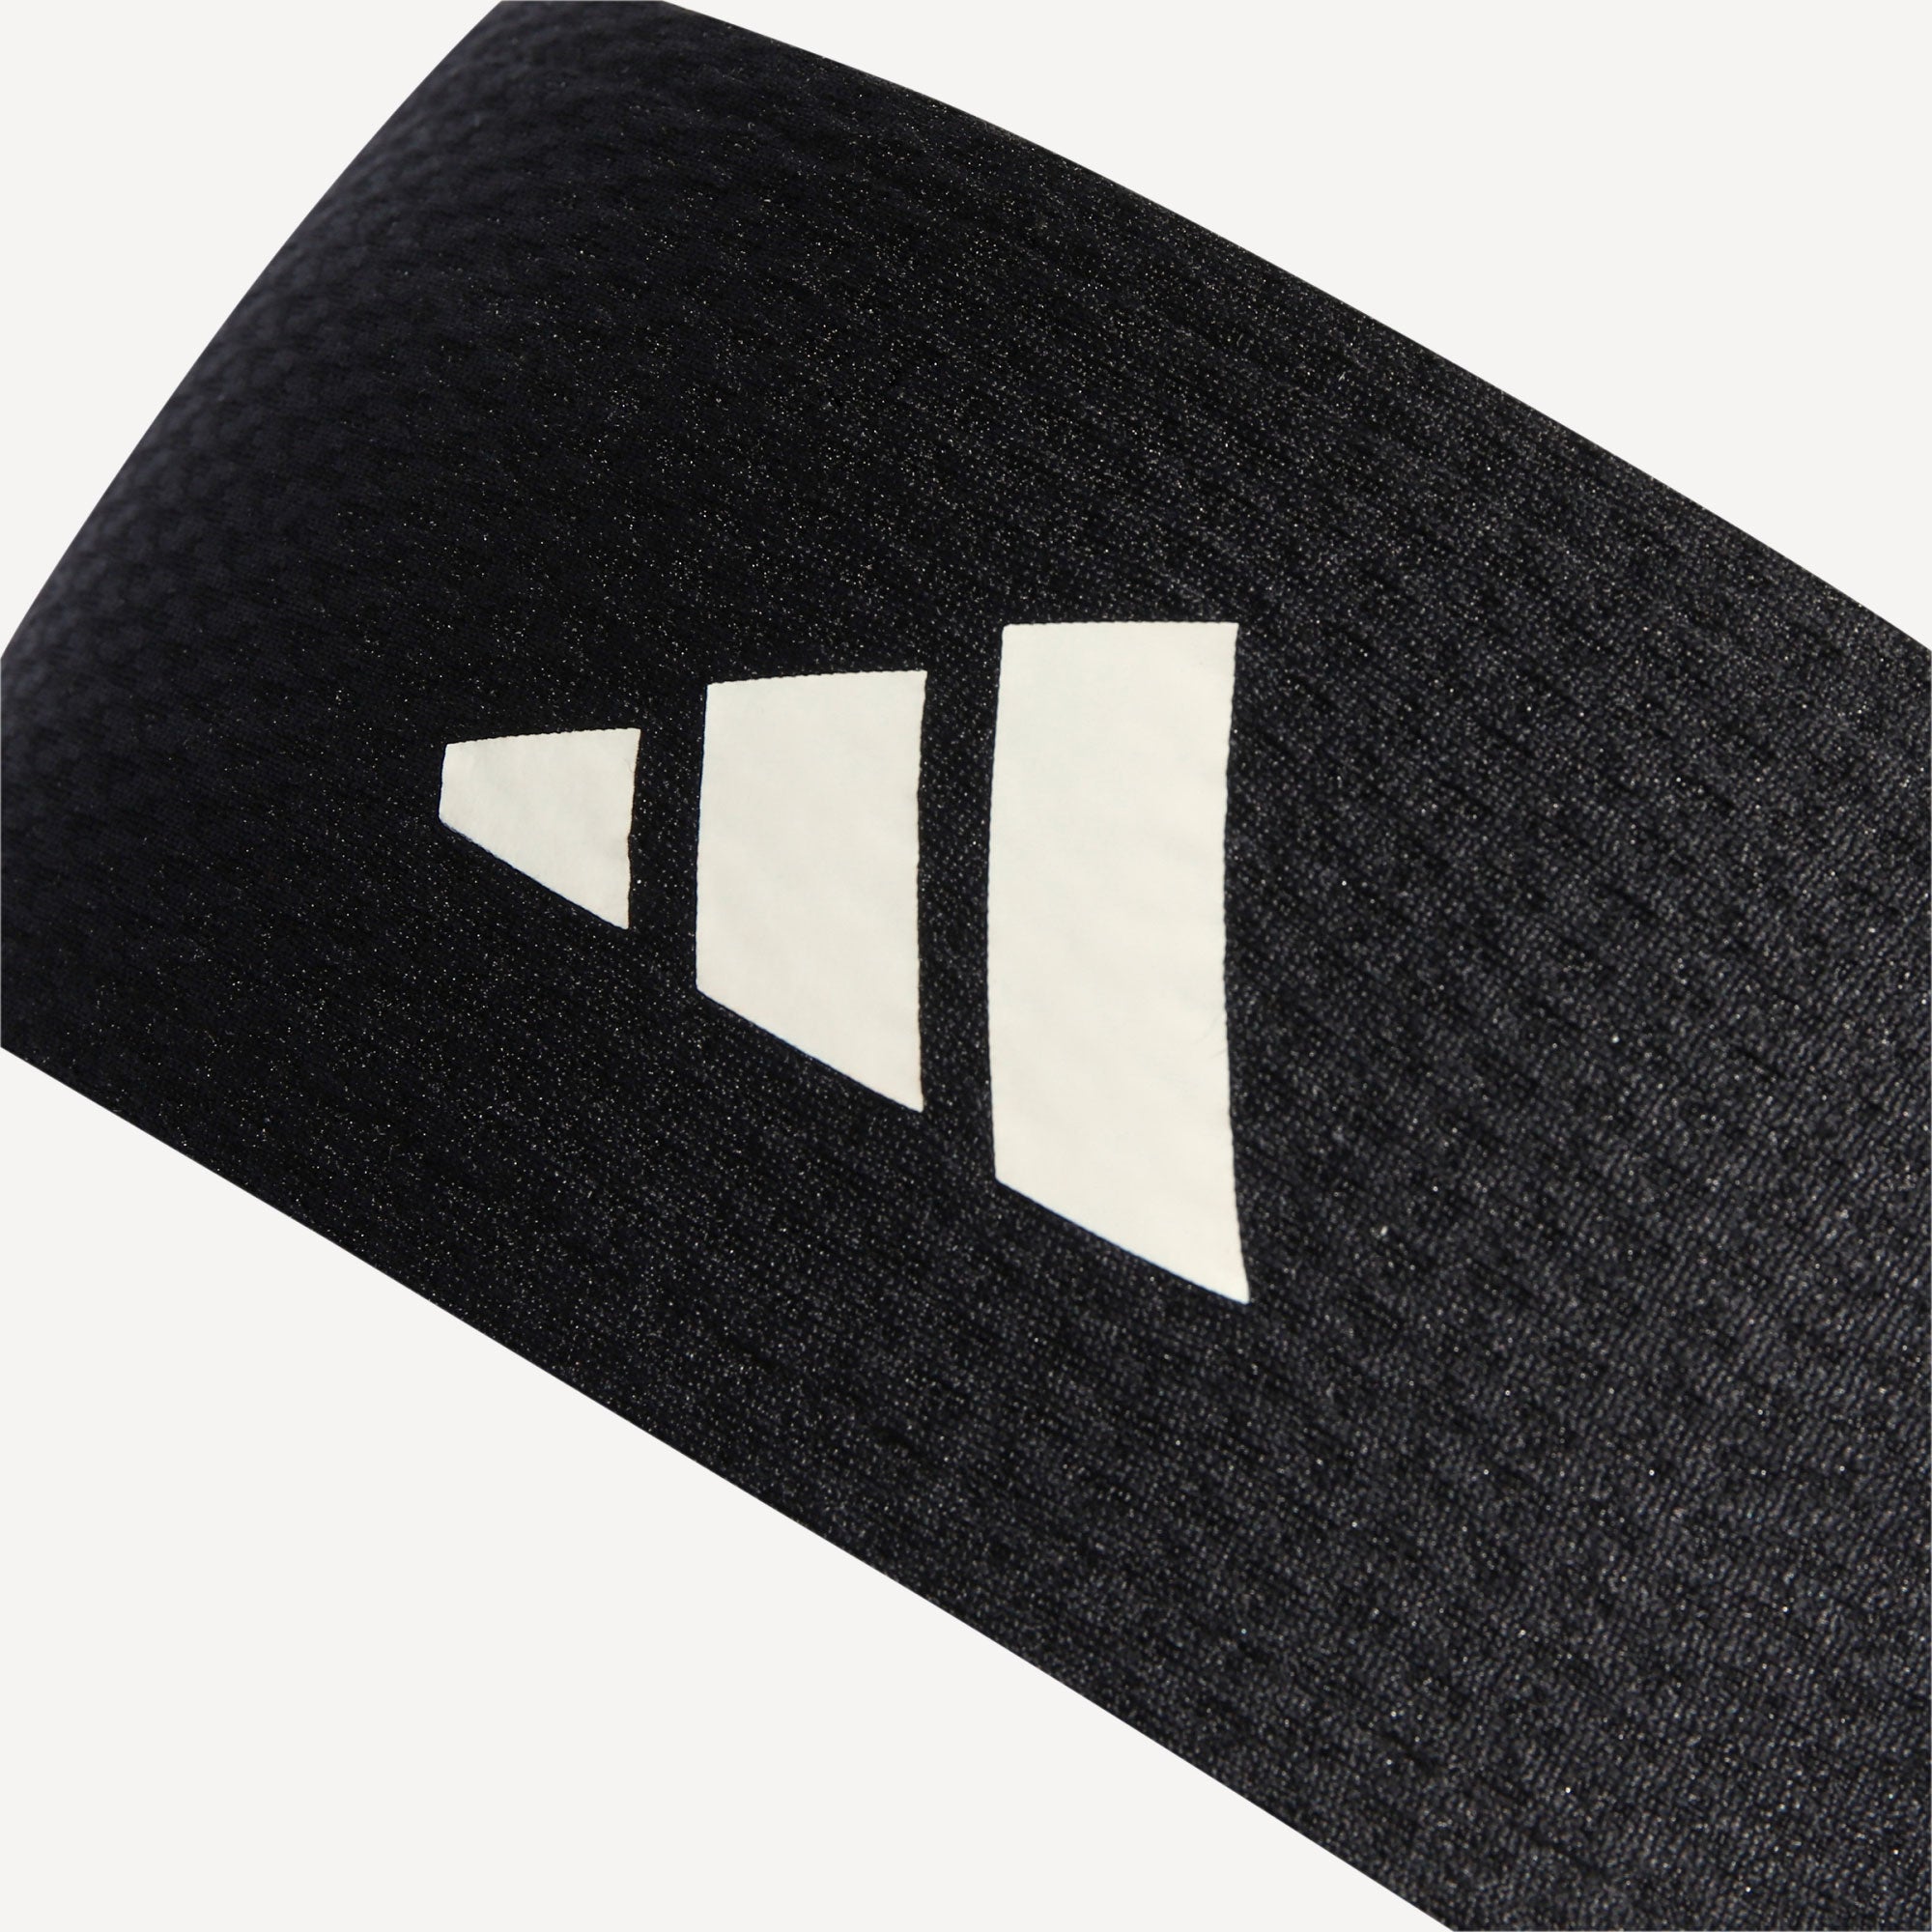 adidas Tennis Tieband - Black (3)